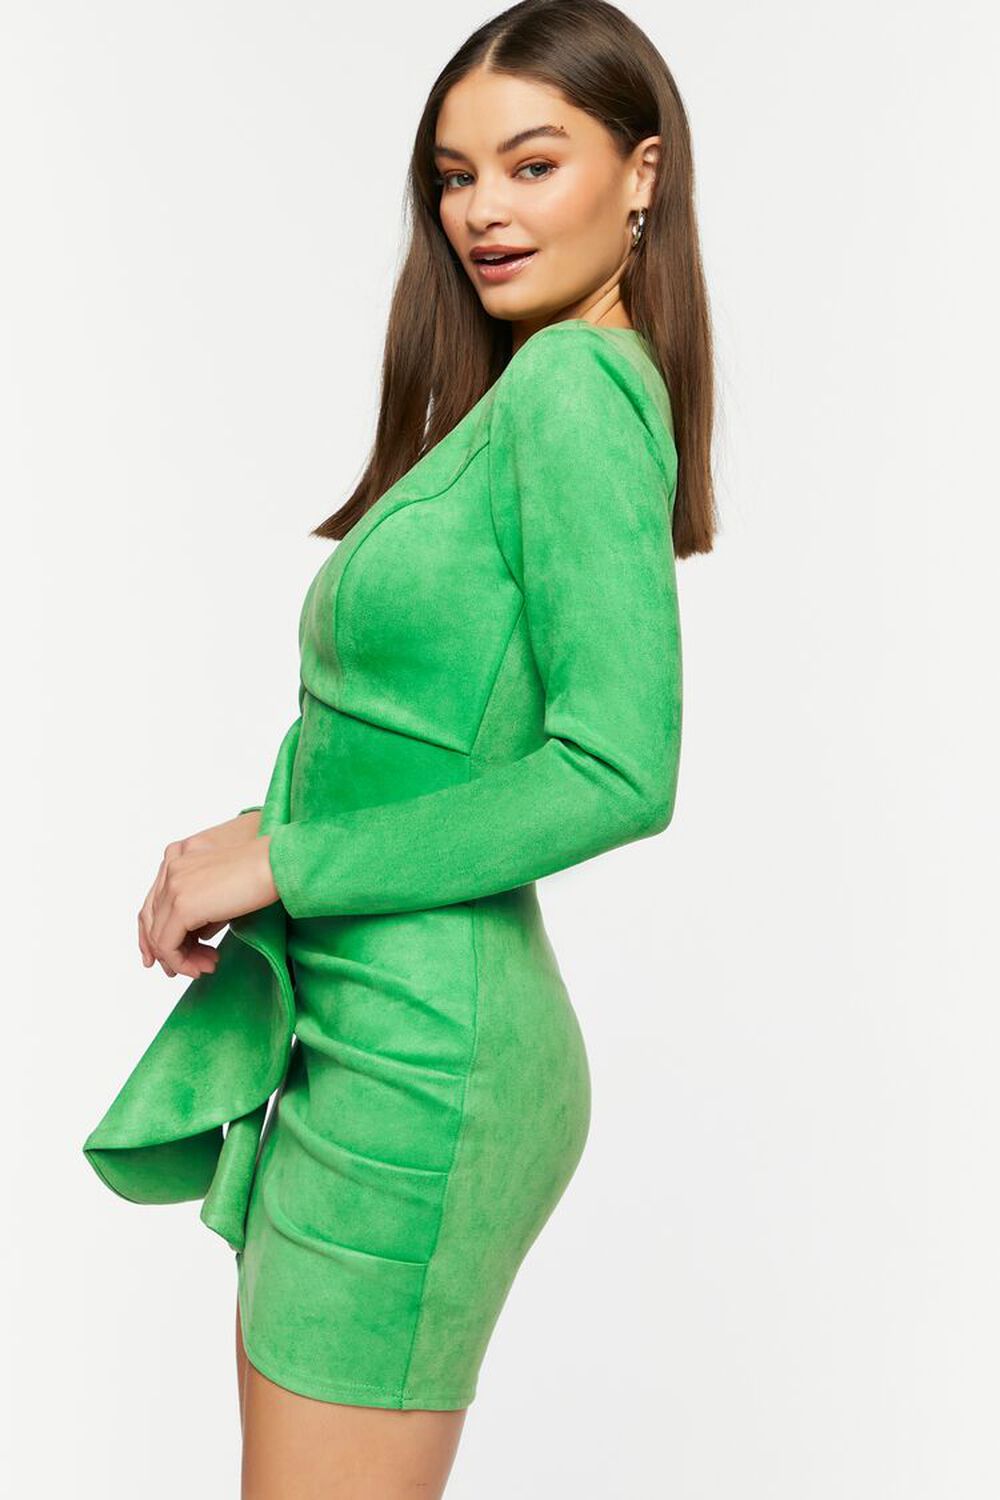 GREEN Faux Suede Godet Mini Dress, image 2